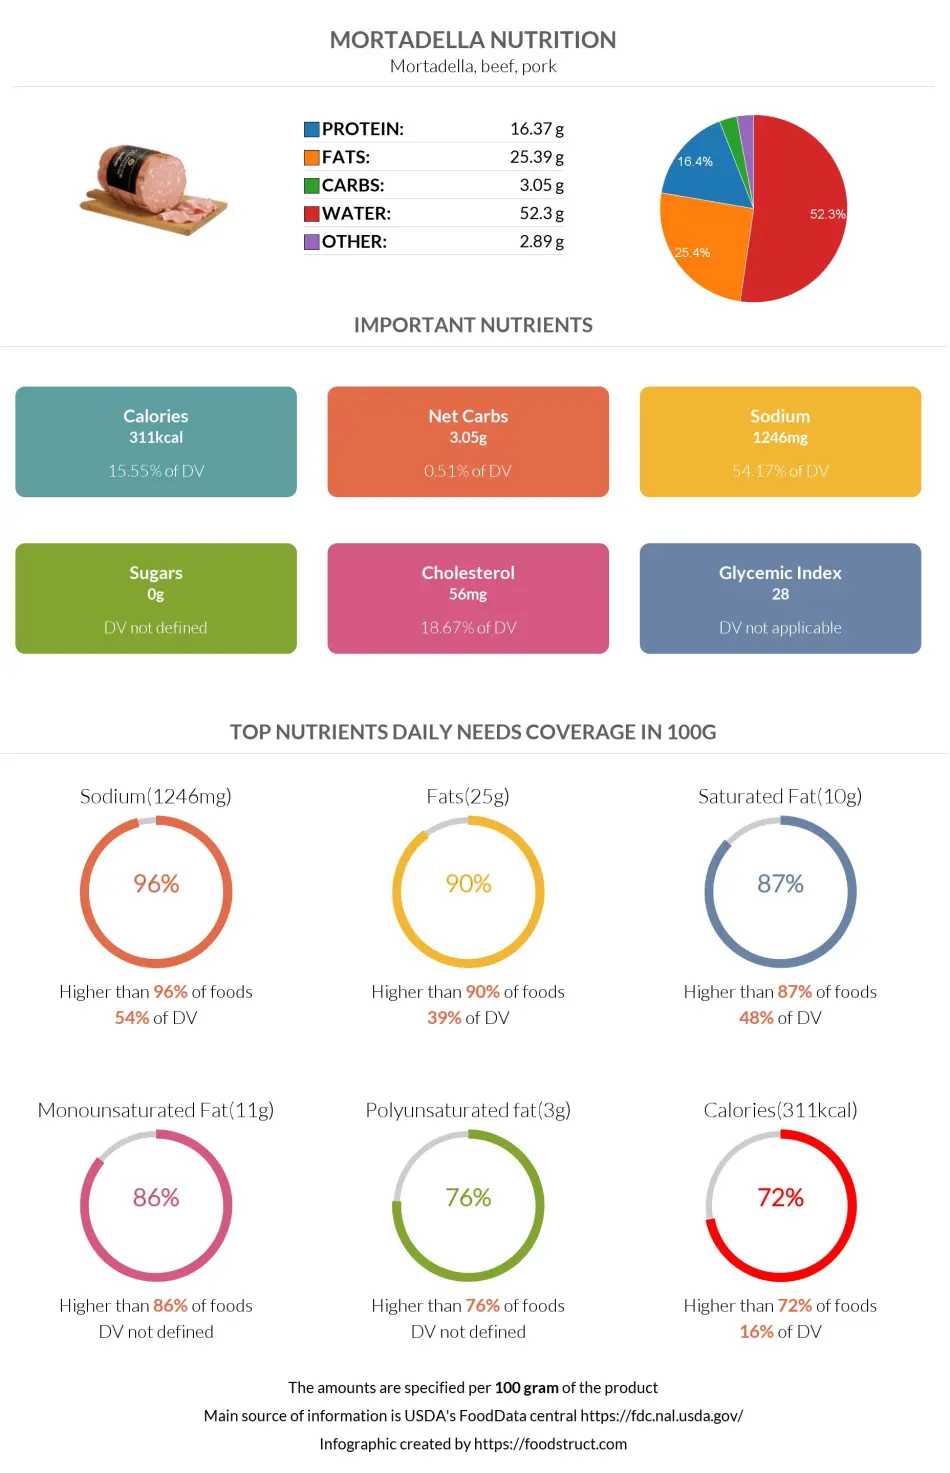 Mortadella nutrition infographic